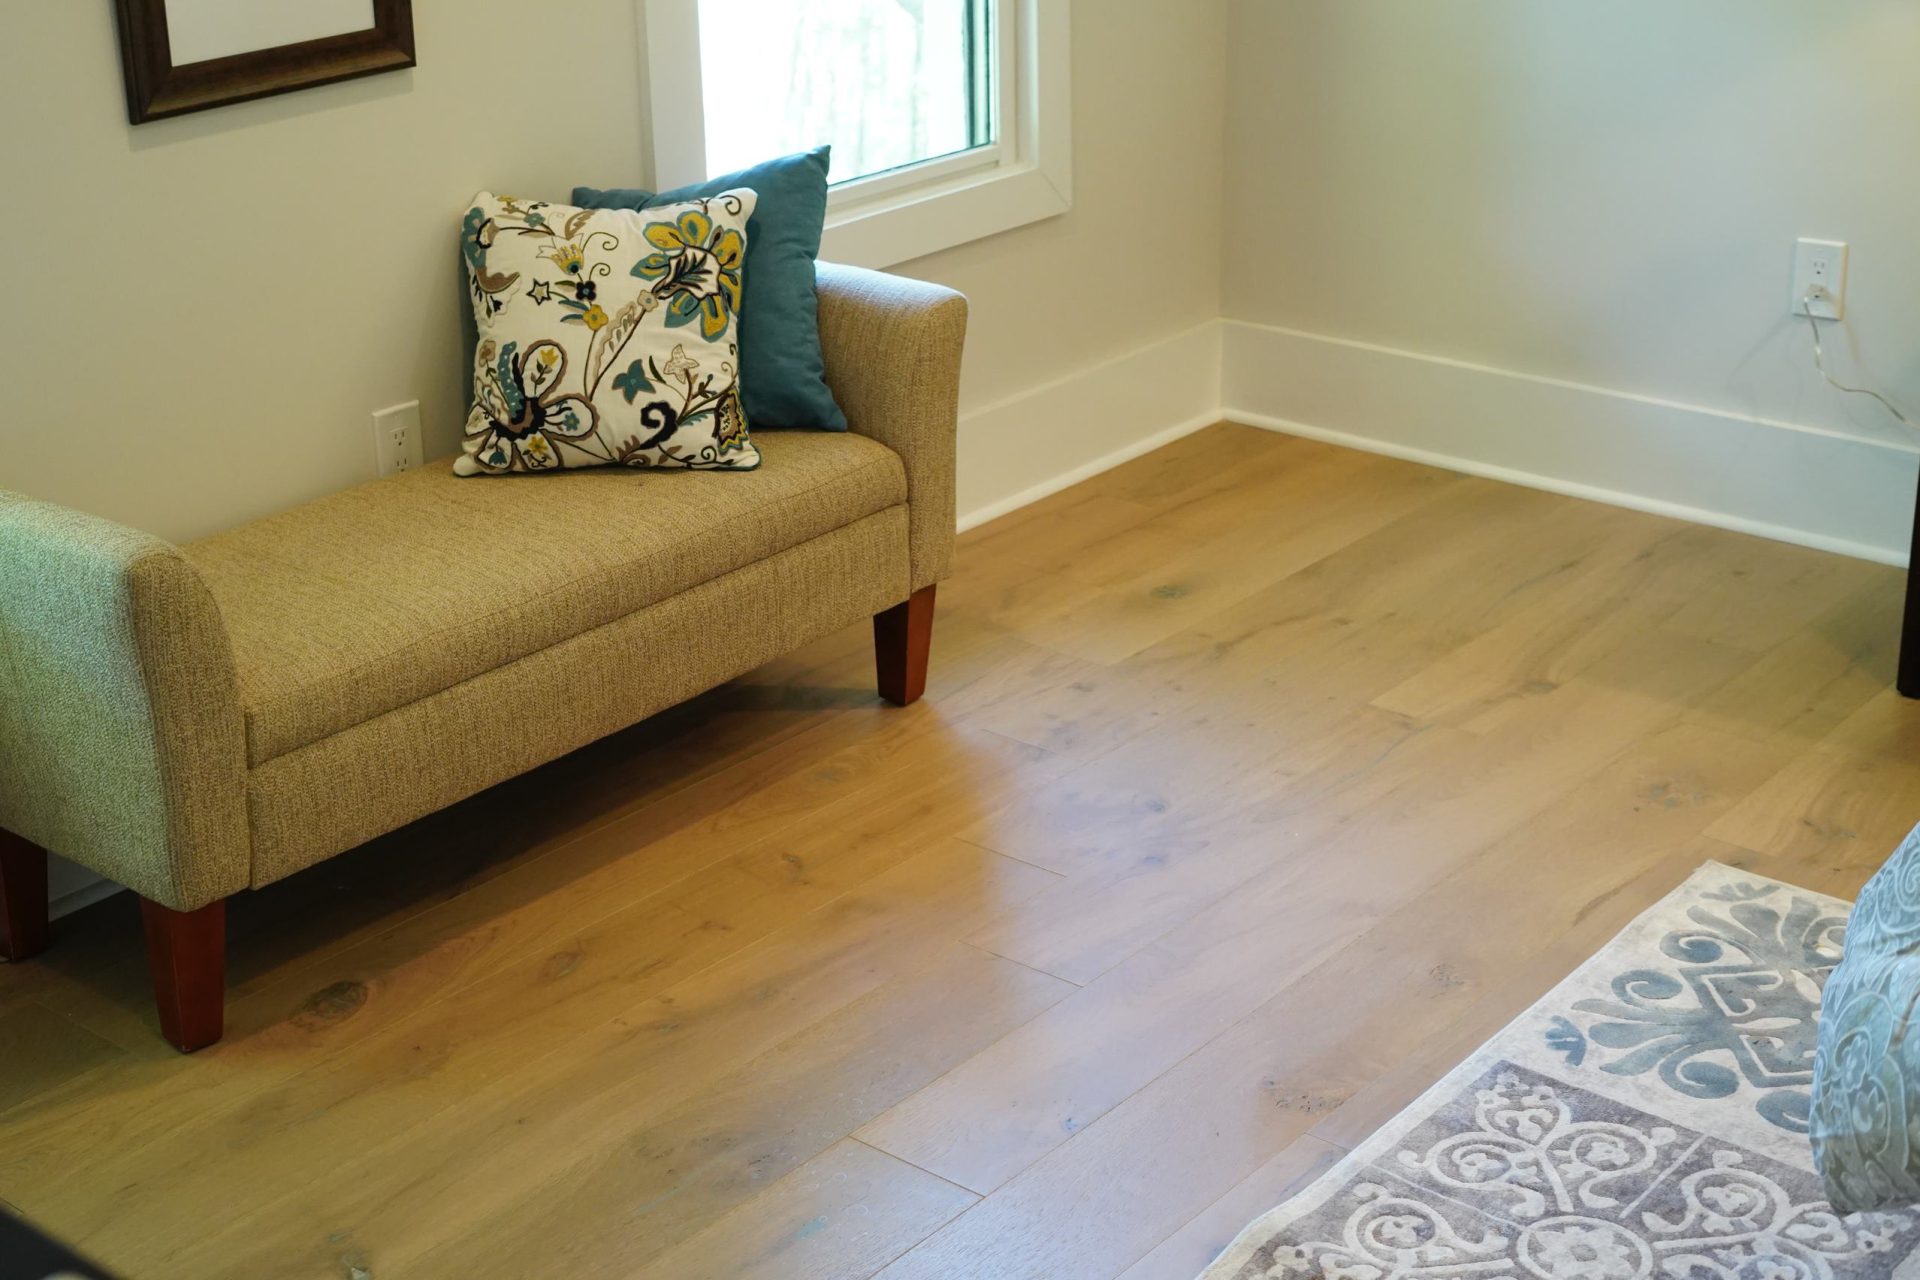 Hardwood floor and ottoman